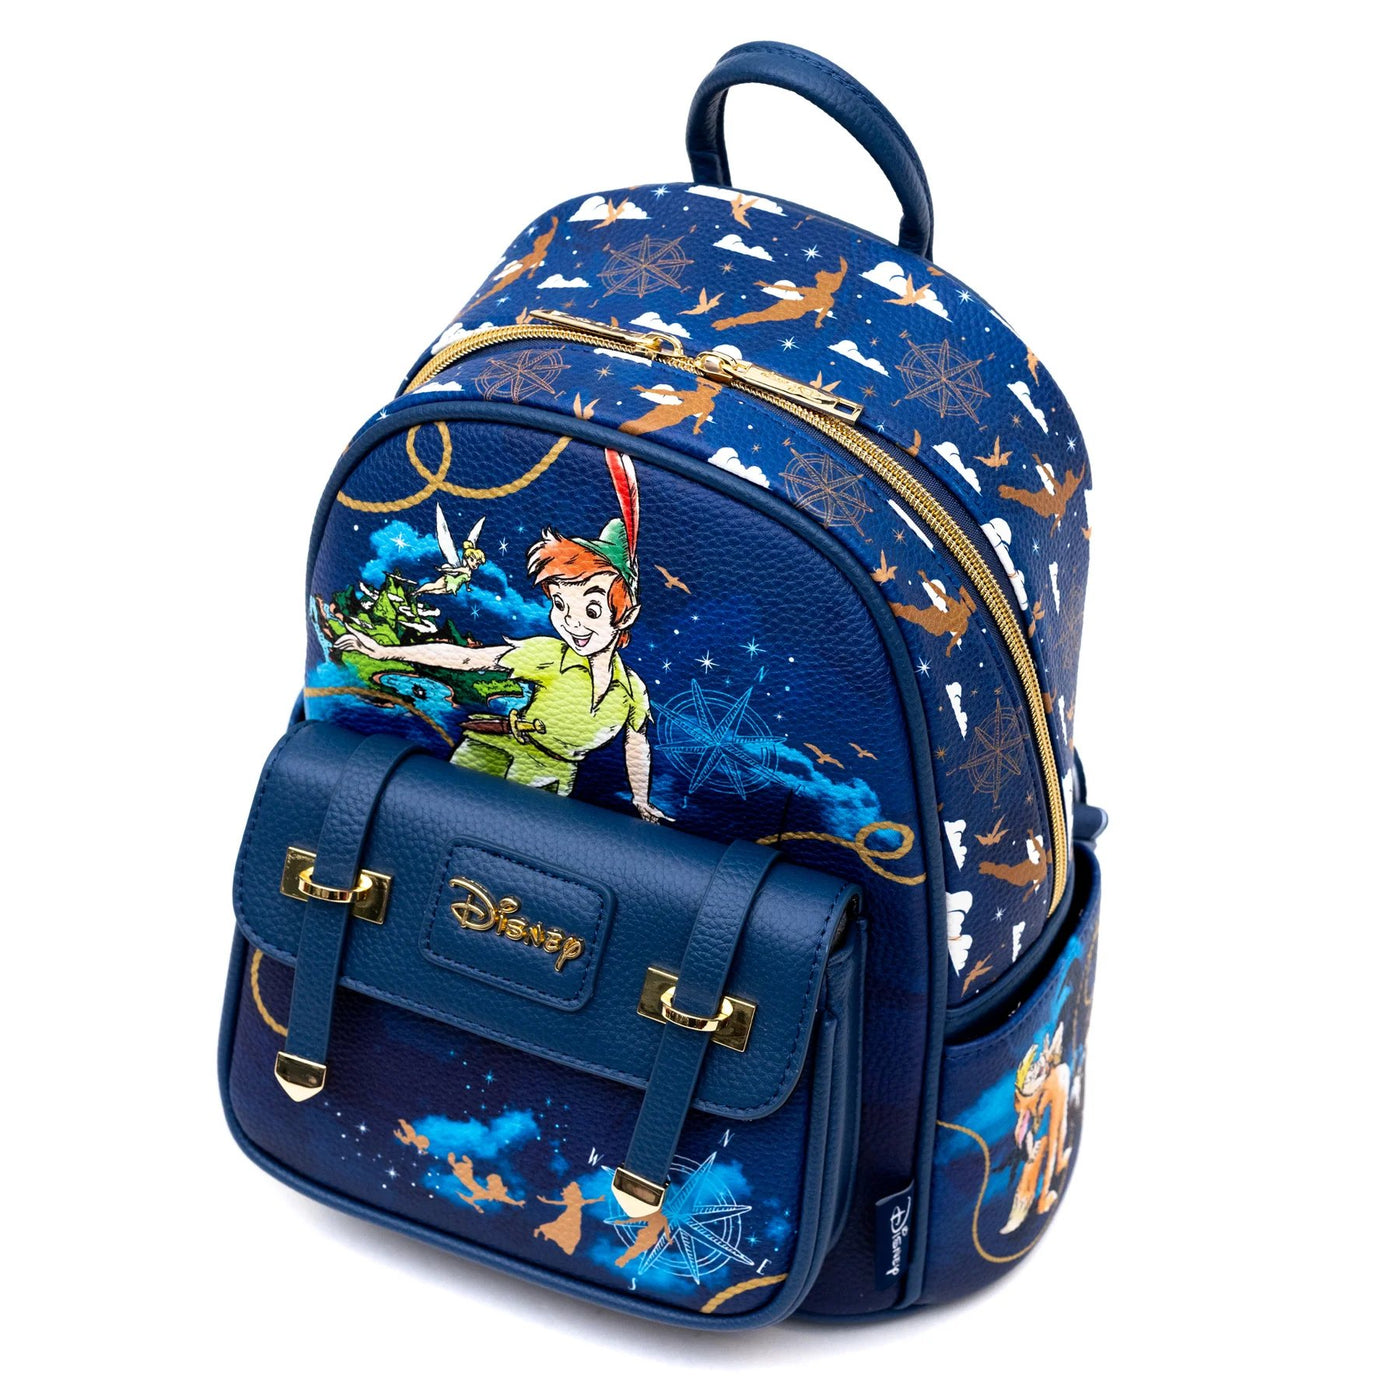 WondaPop Disney Peter Pan Mini Backpack - Top View